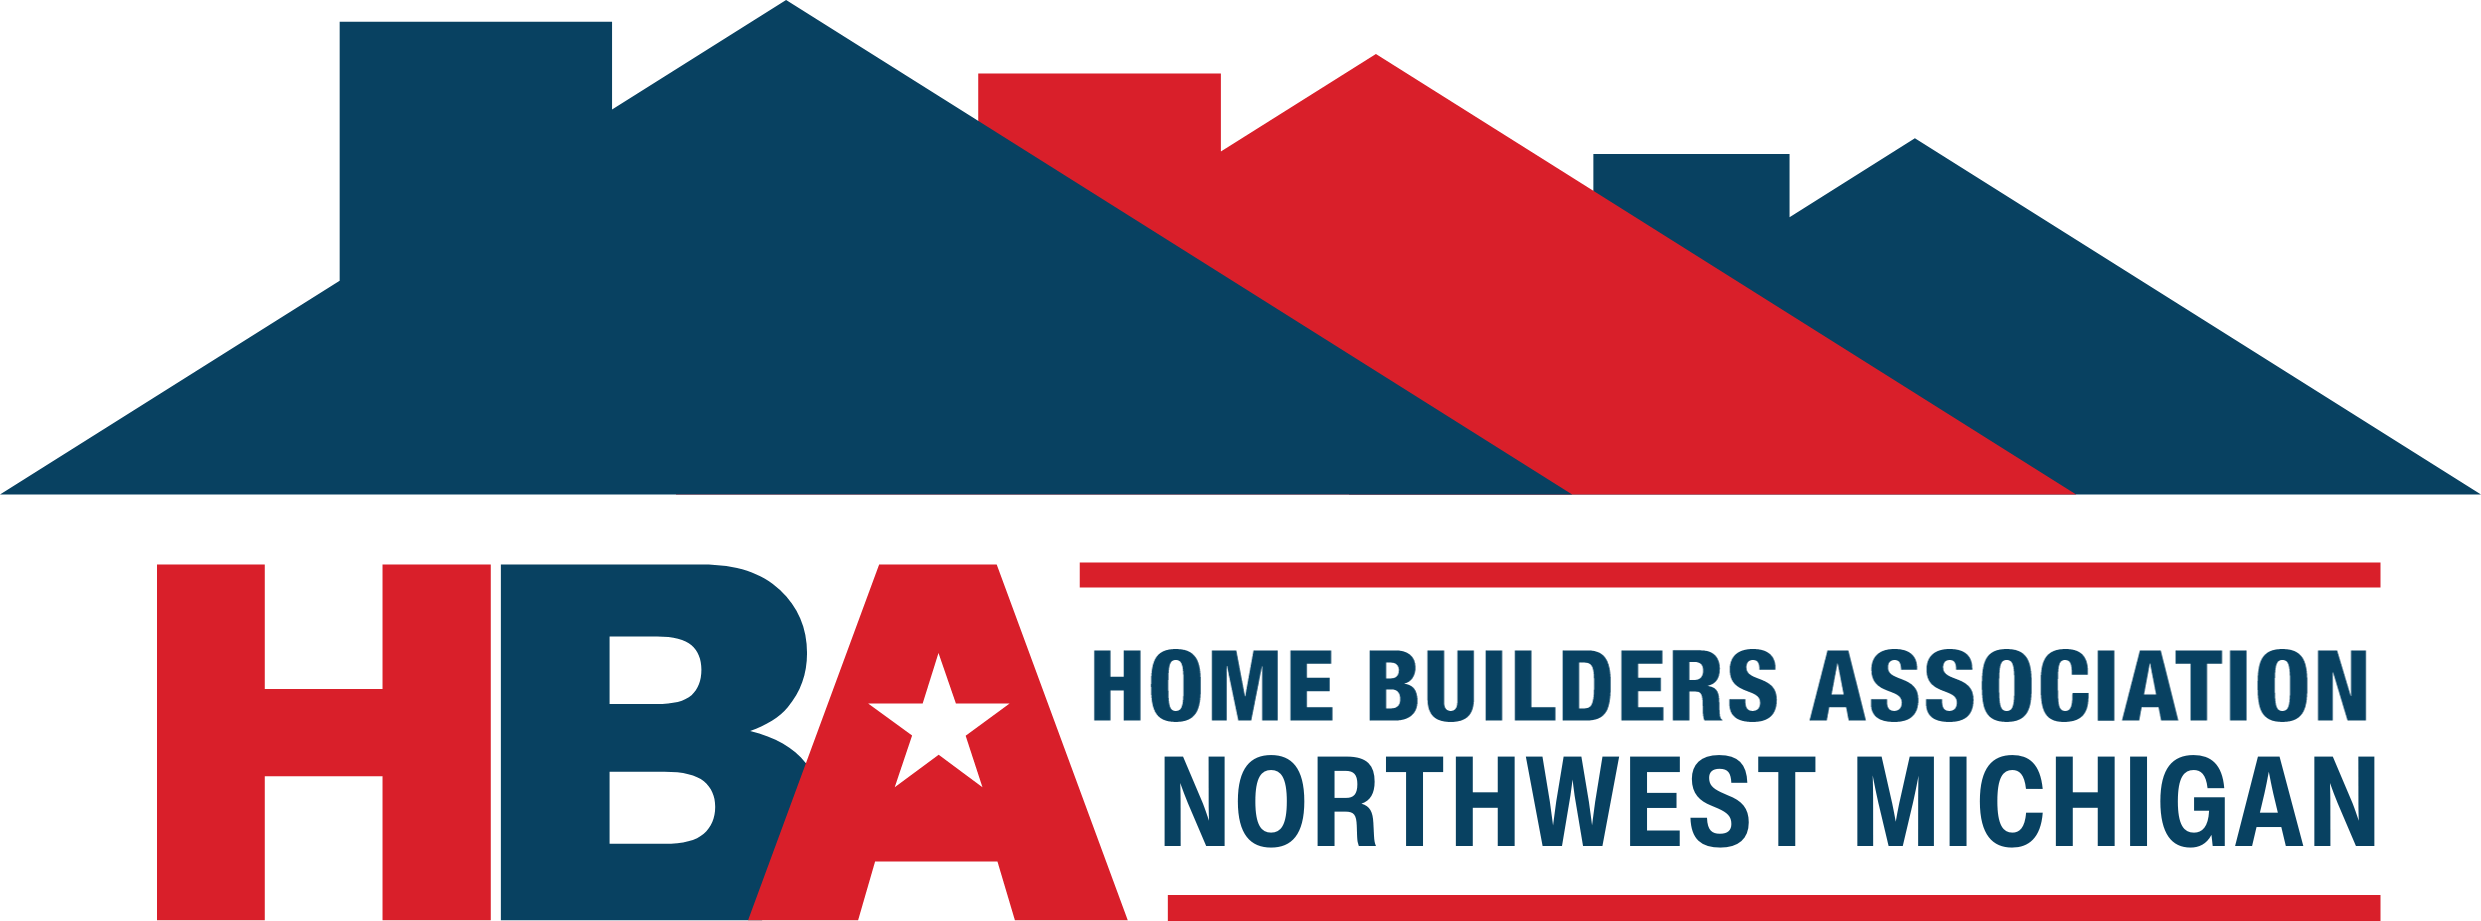 Home Builders Association Northwest Michigan